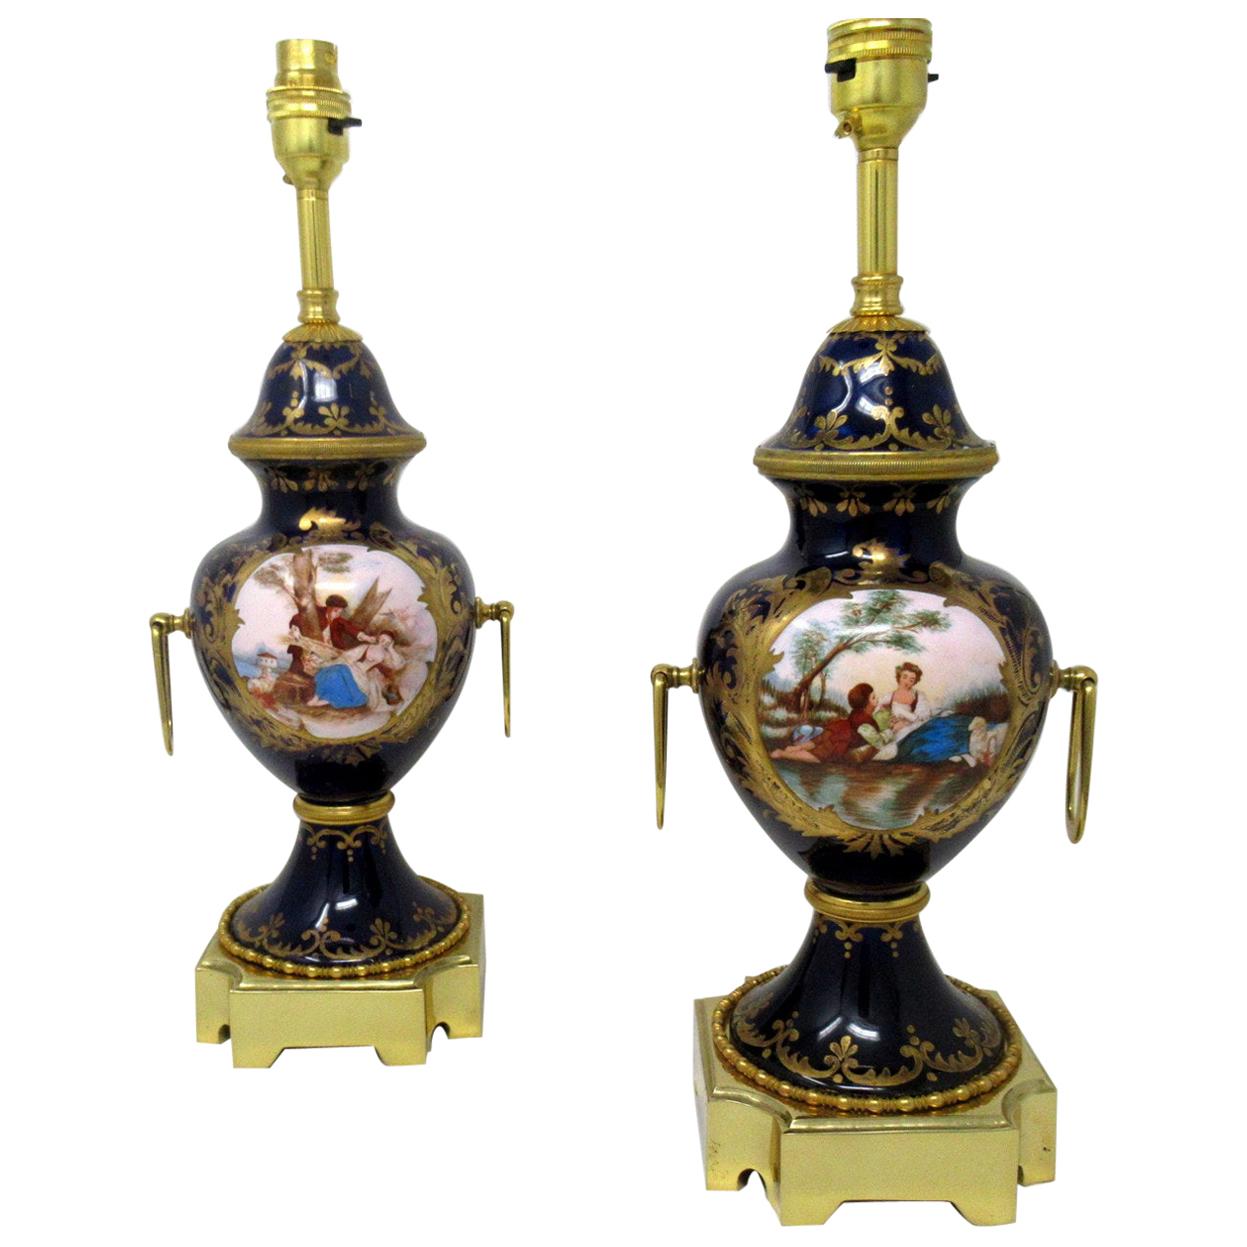 Pair of Antique French Sèvres Porcelain Ormolu Gilt Bronze Table Urn Lamps 